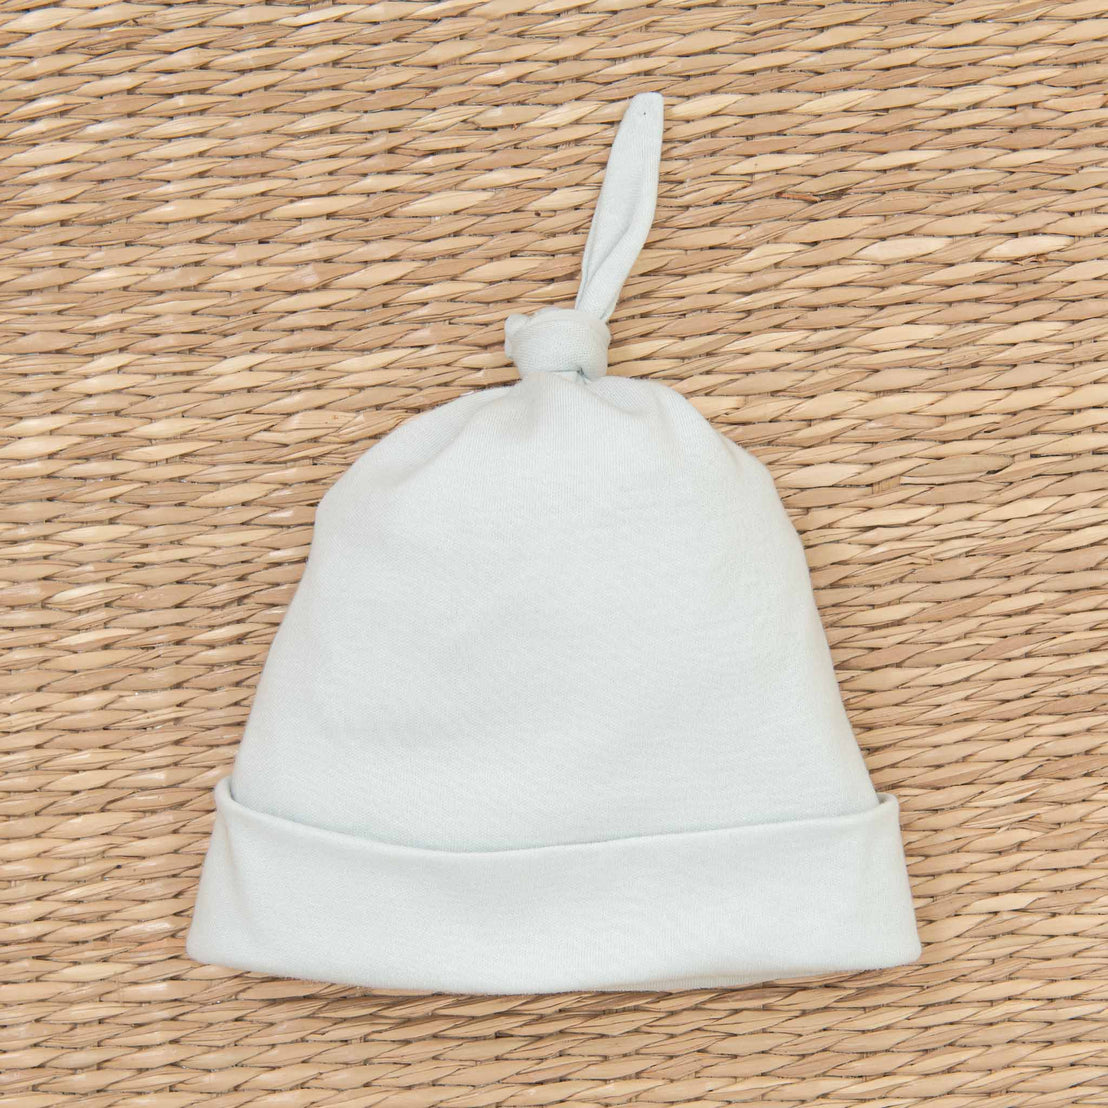 A plain white Aiden Newborn Knot Cap, laid flat on a textured beige woven background.